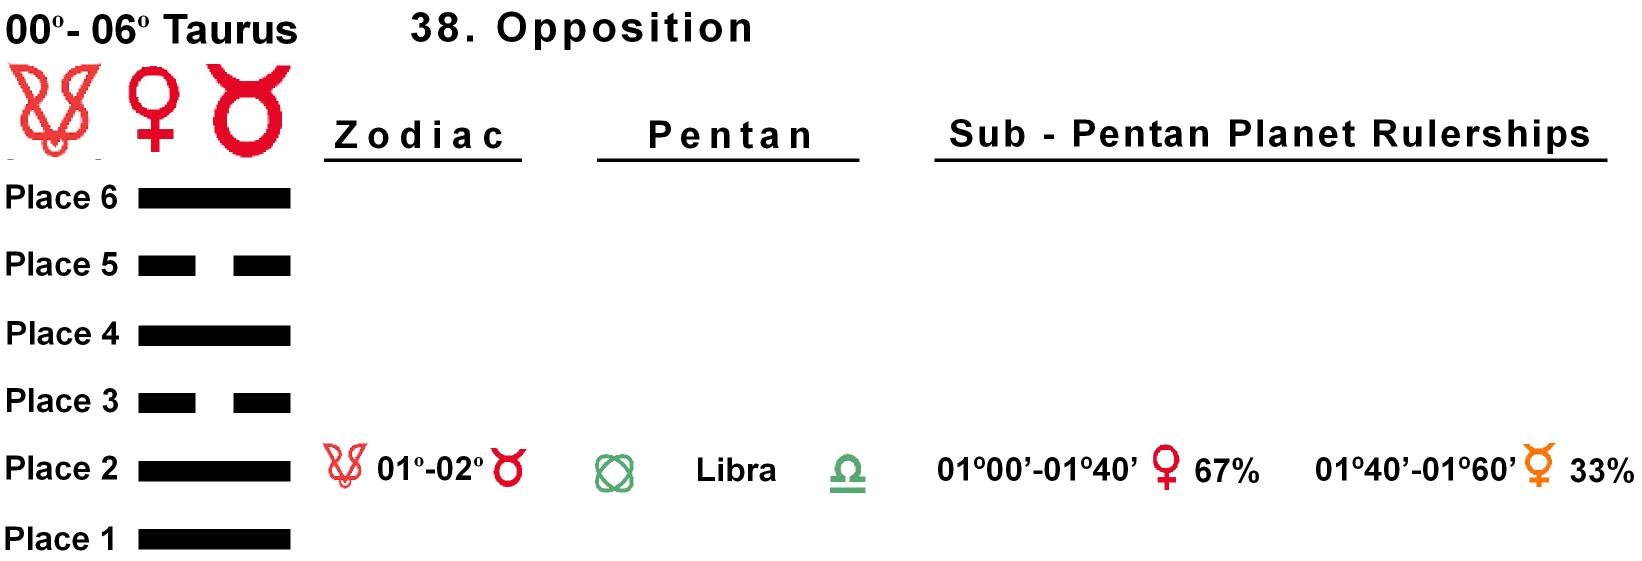 Pent-lines-02TA 01-02 Hx-38 Opposition